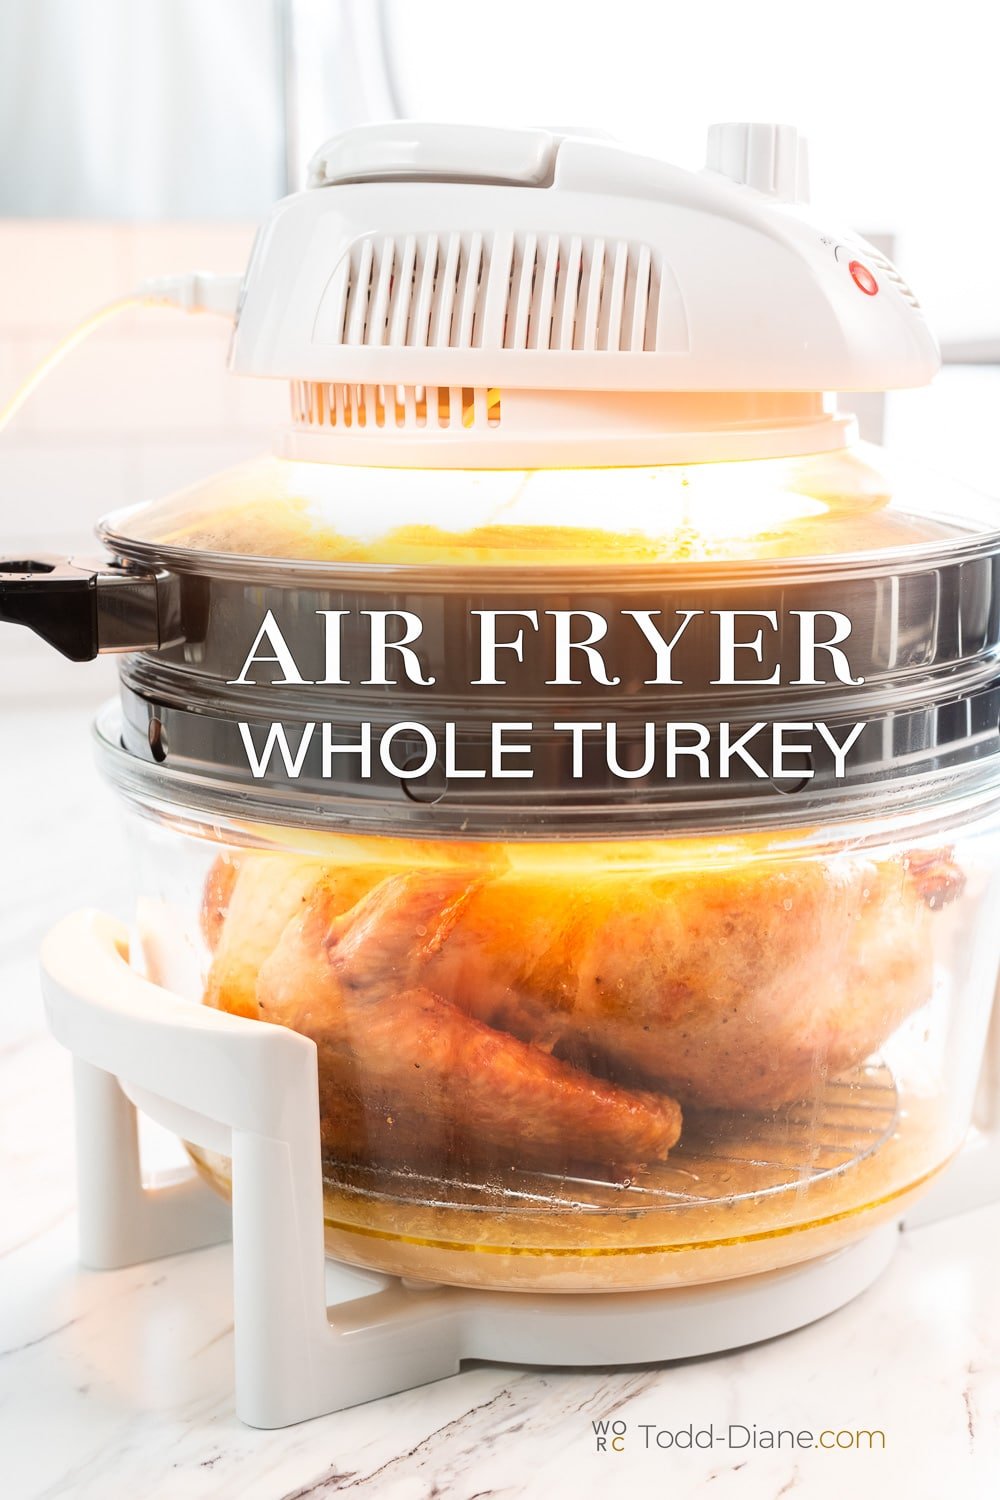 https://whiteonricecouple.com/recipe/images/Air-Fryer-Turkey-WORC-2.jpg